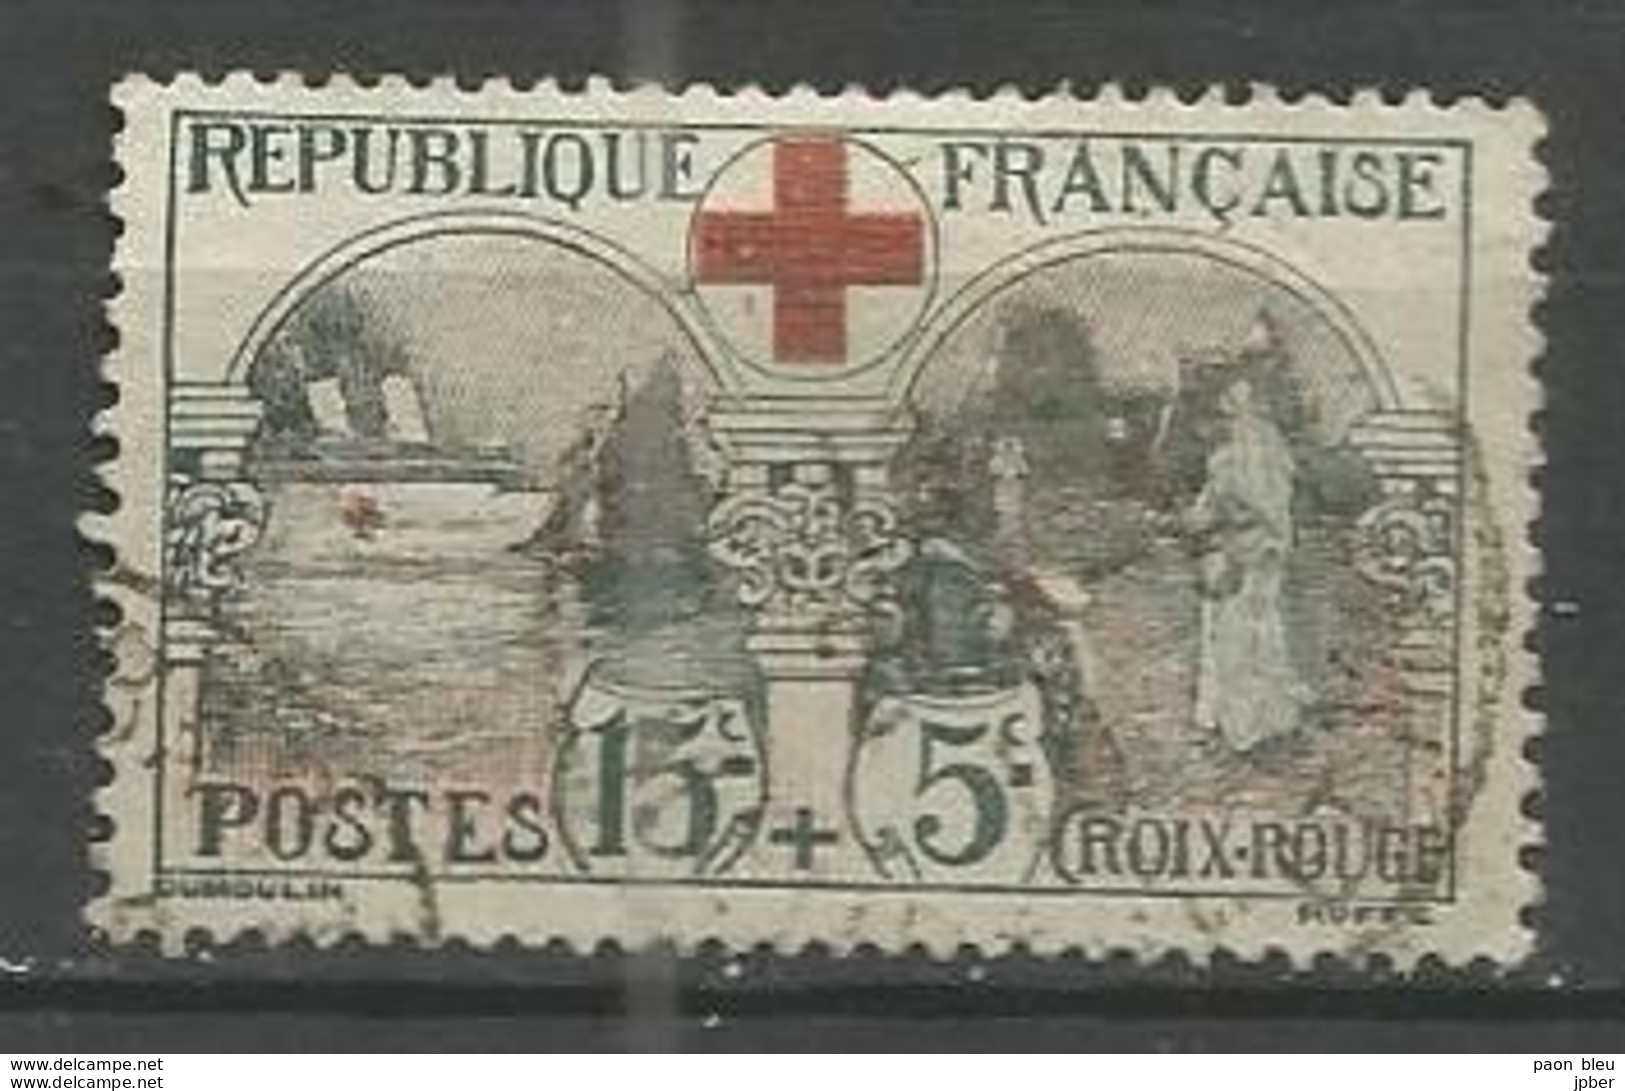 France - Croix-Rouge N°156 - Usati